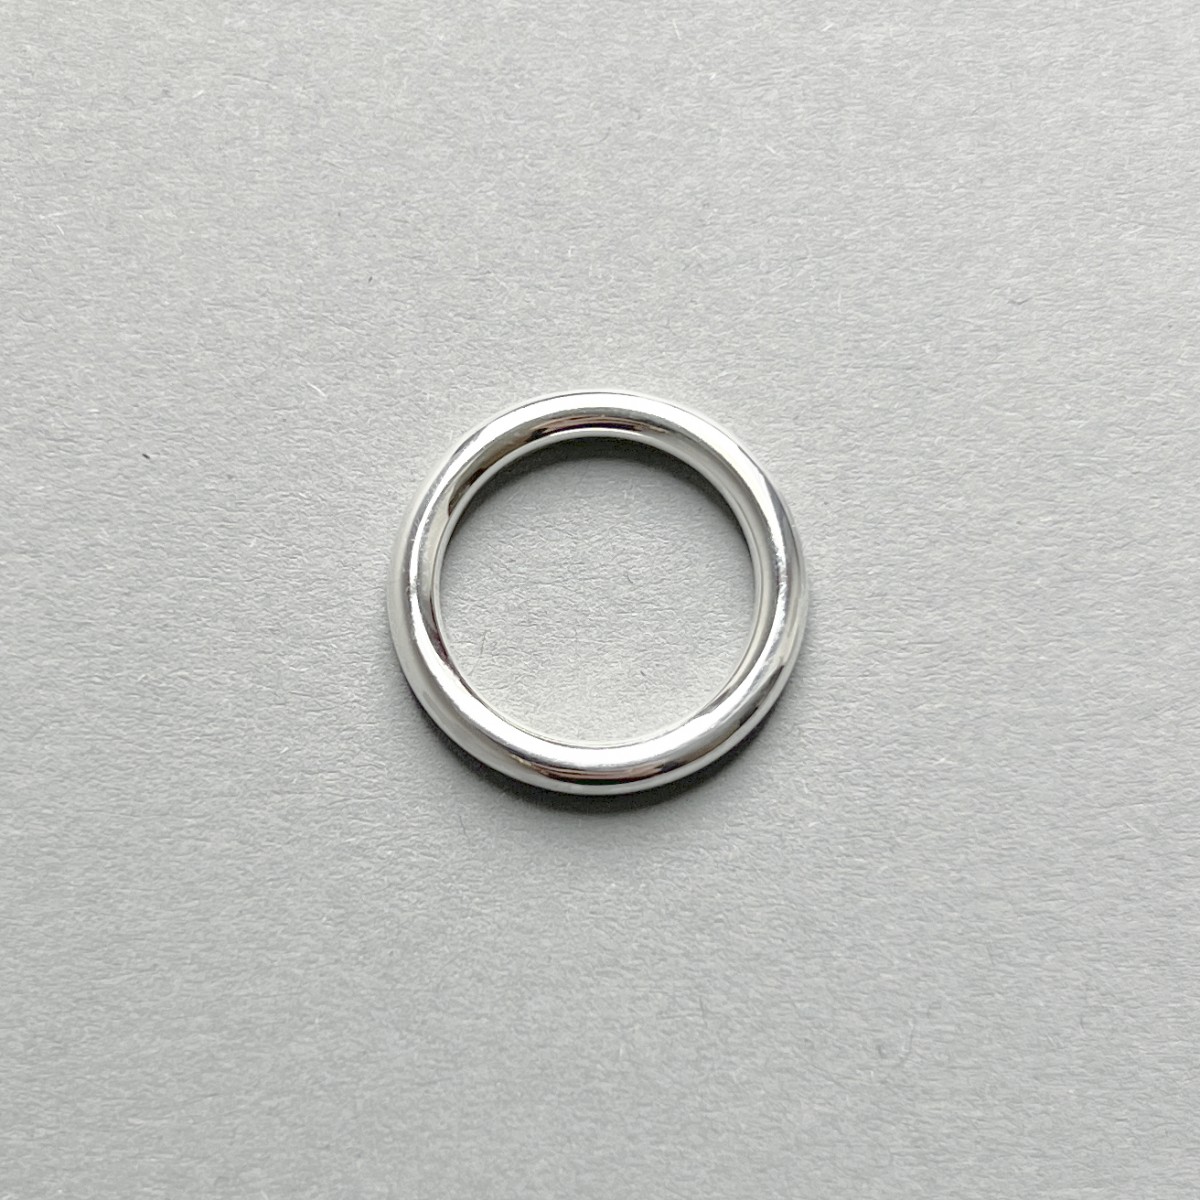 Teresa Gruber Ring "solid" 925 Silber